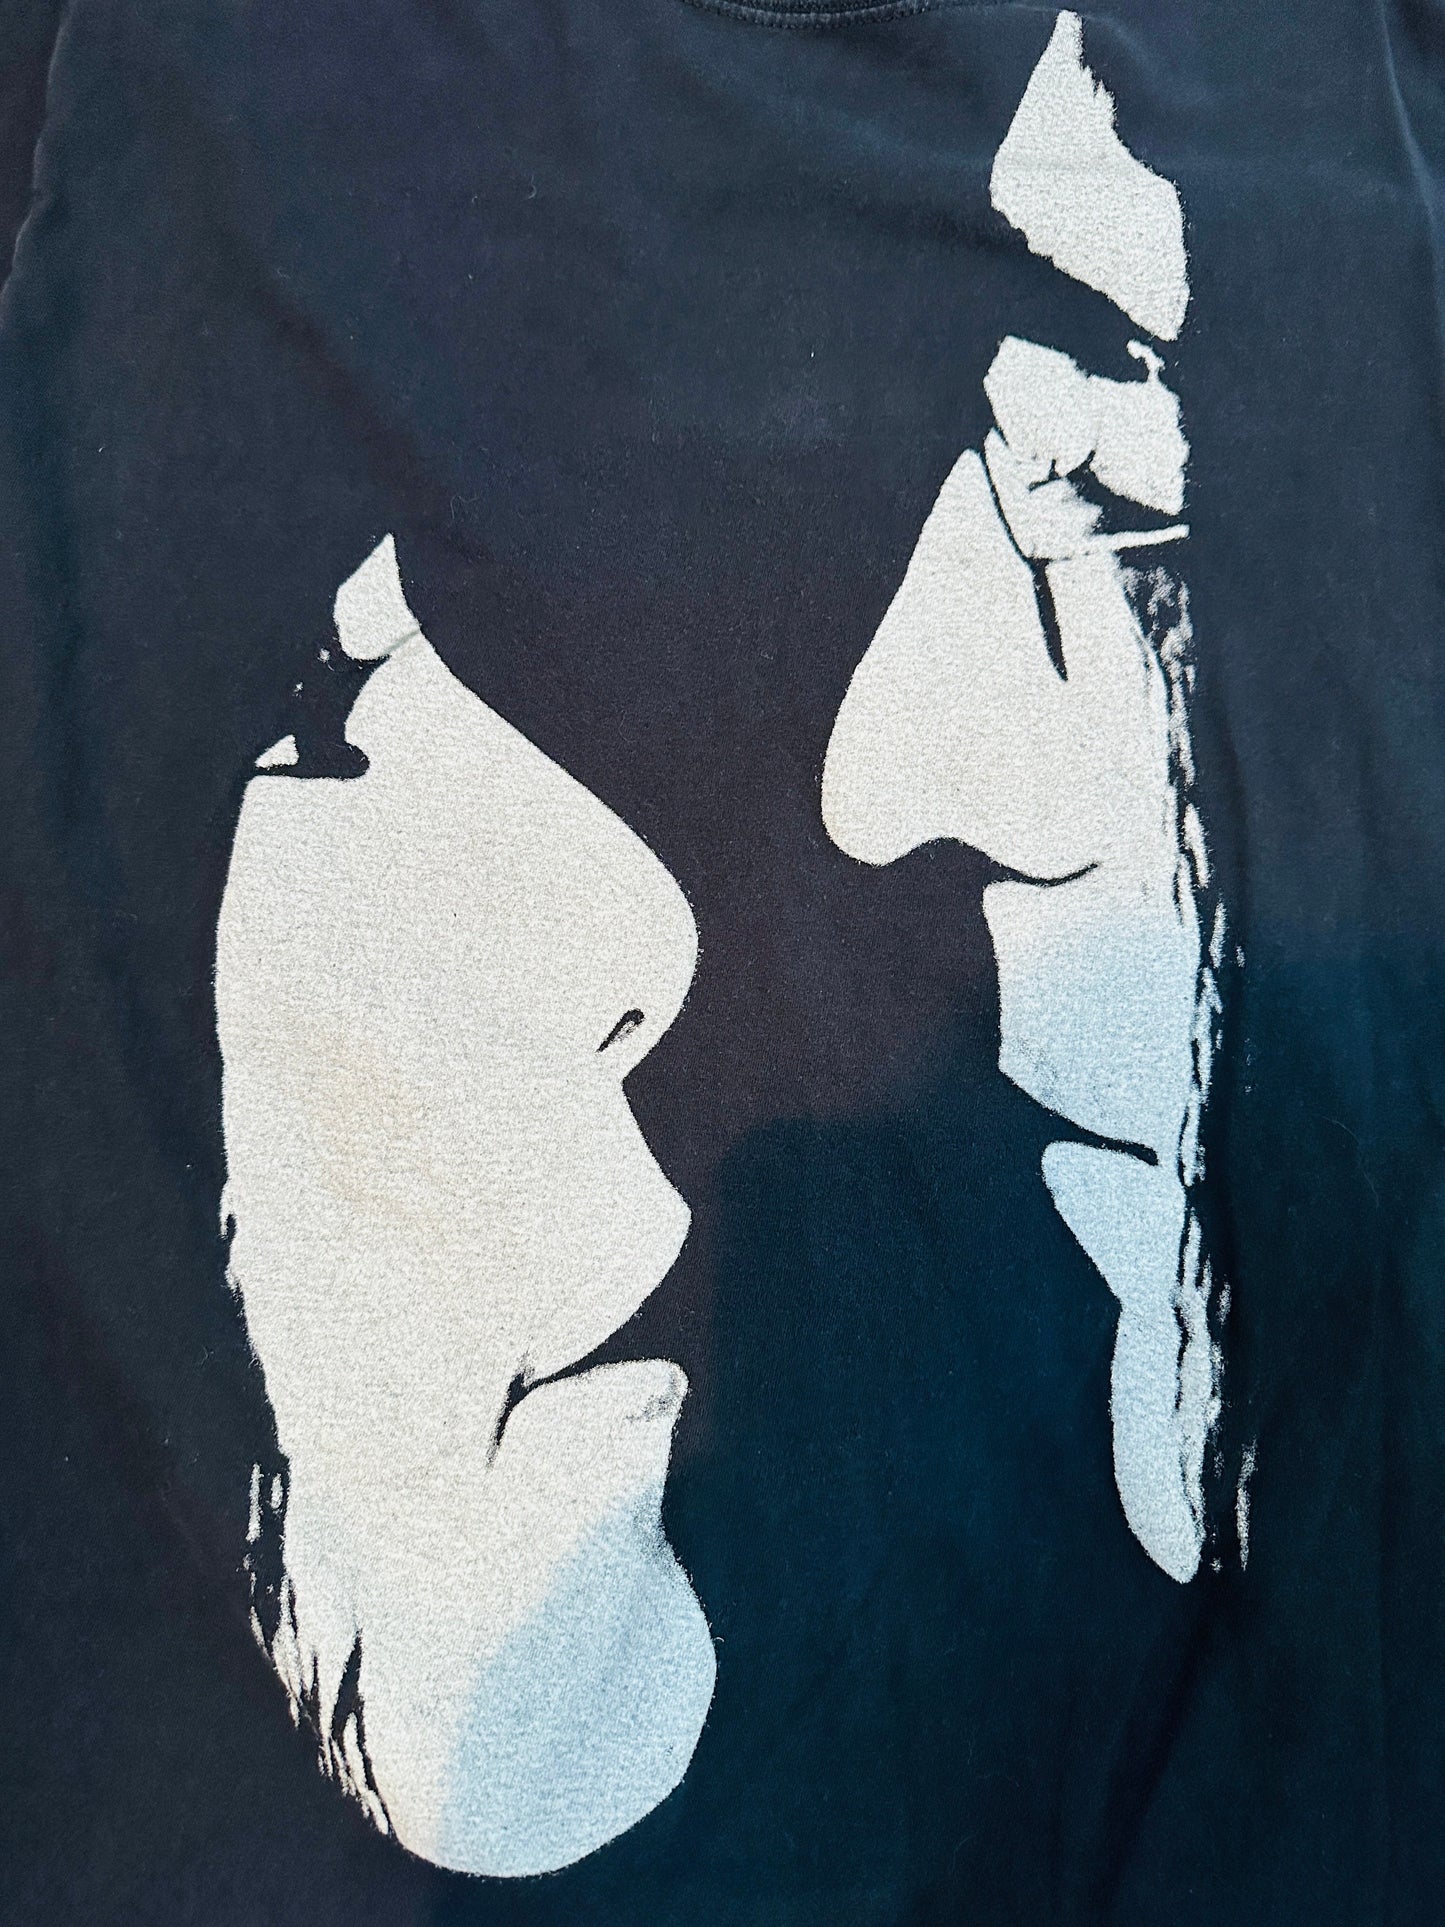 John Lennon and Yoko Ono T-shirt